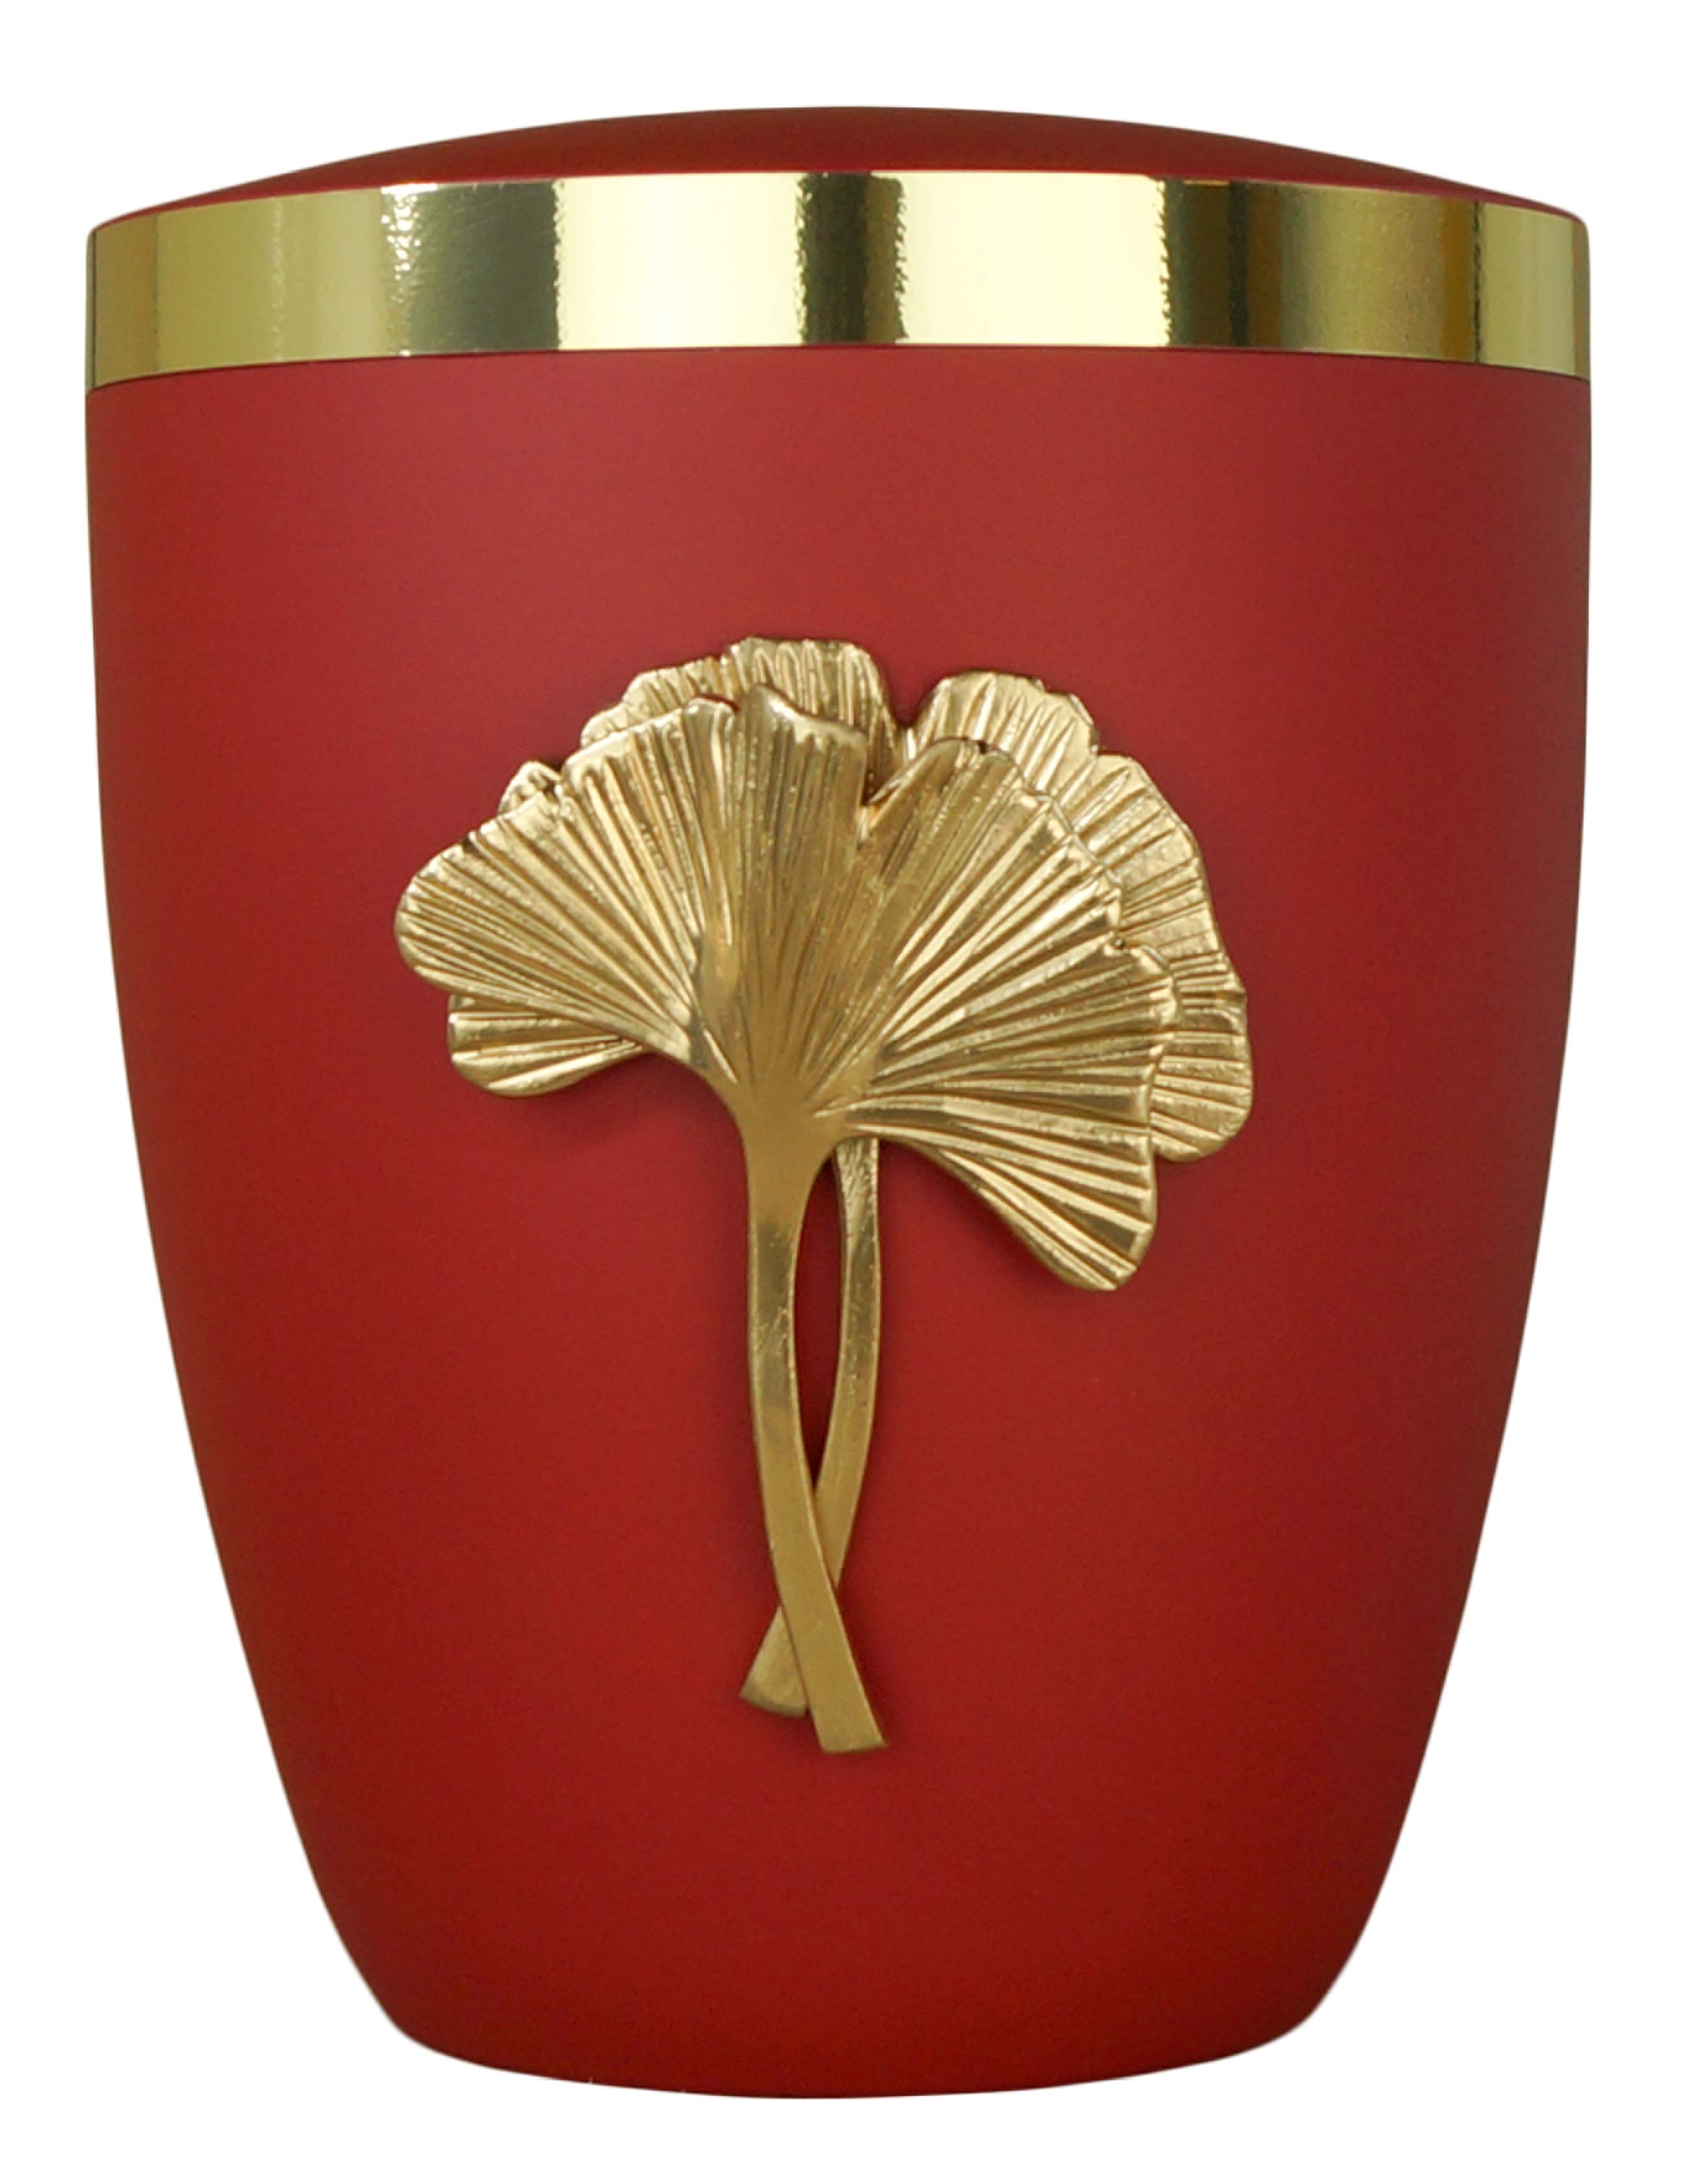 Flüssigholzurne glint-lavared, Design "Ginkgo" in gold, Goldband